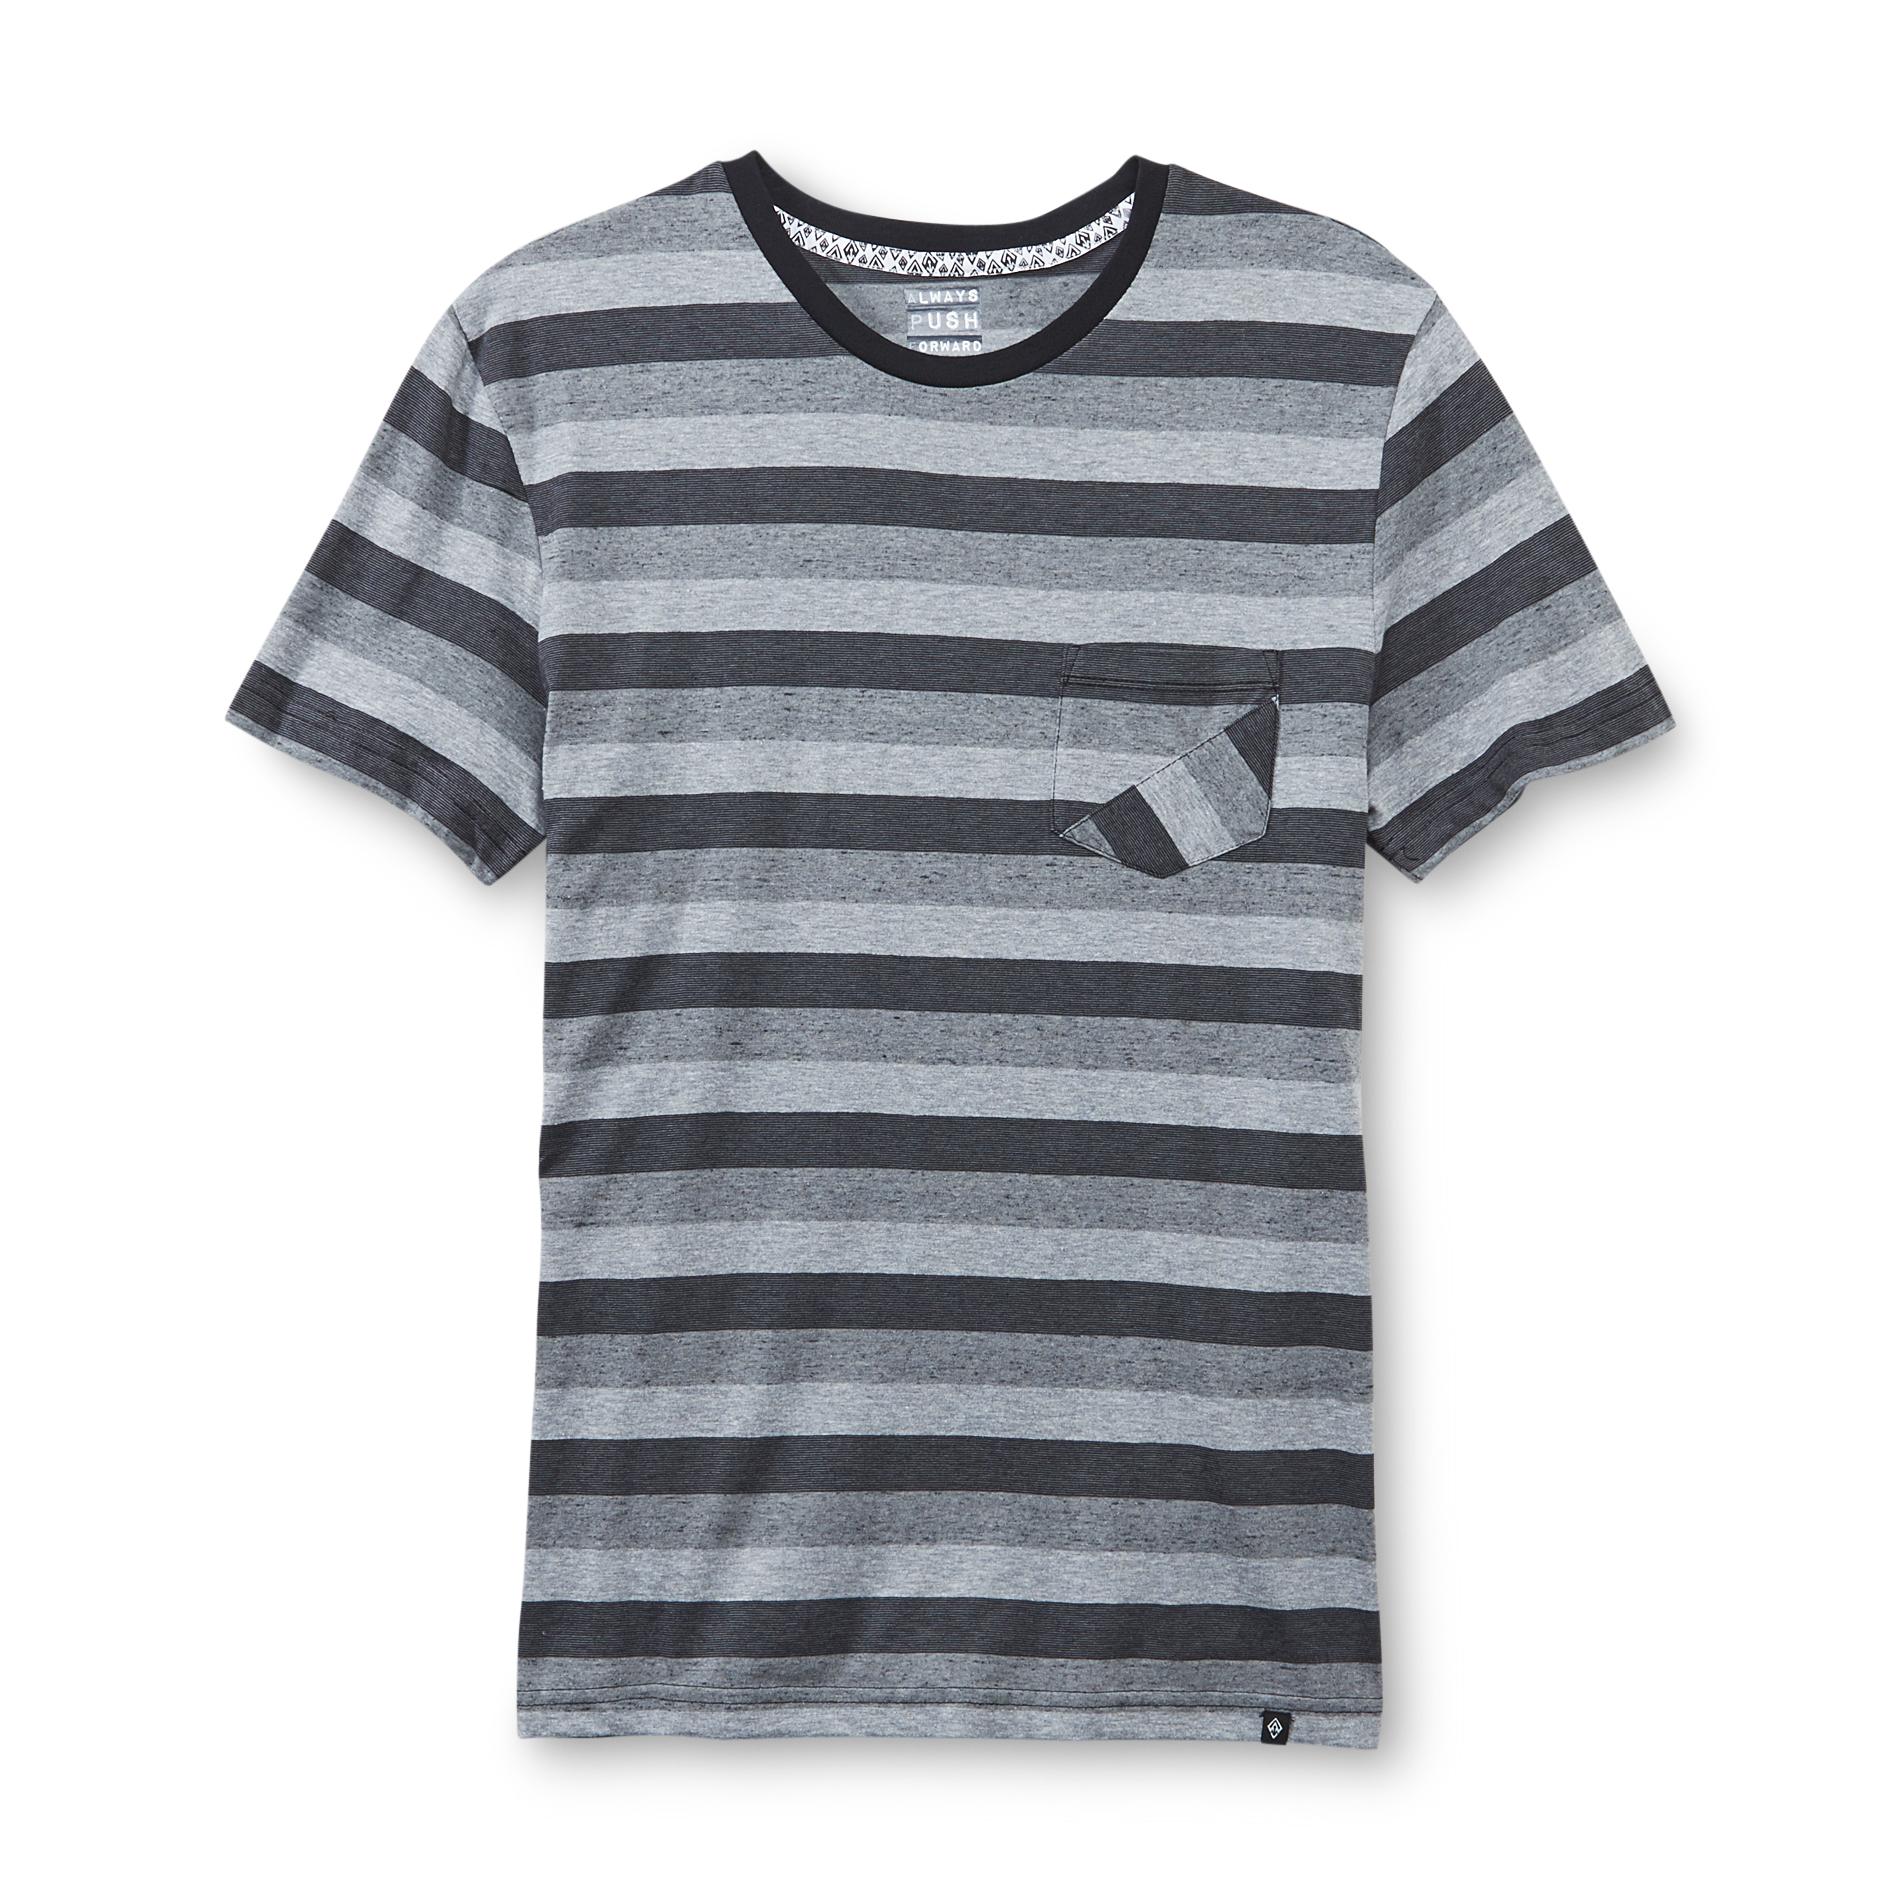 Always Push Forward Men's Pocket T-Shirt - Striped